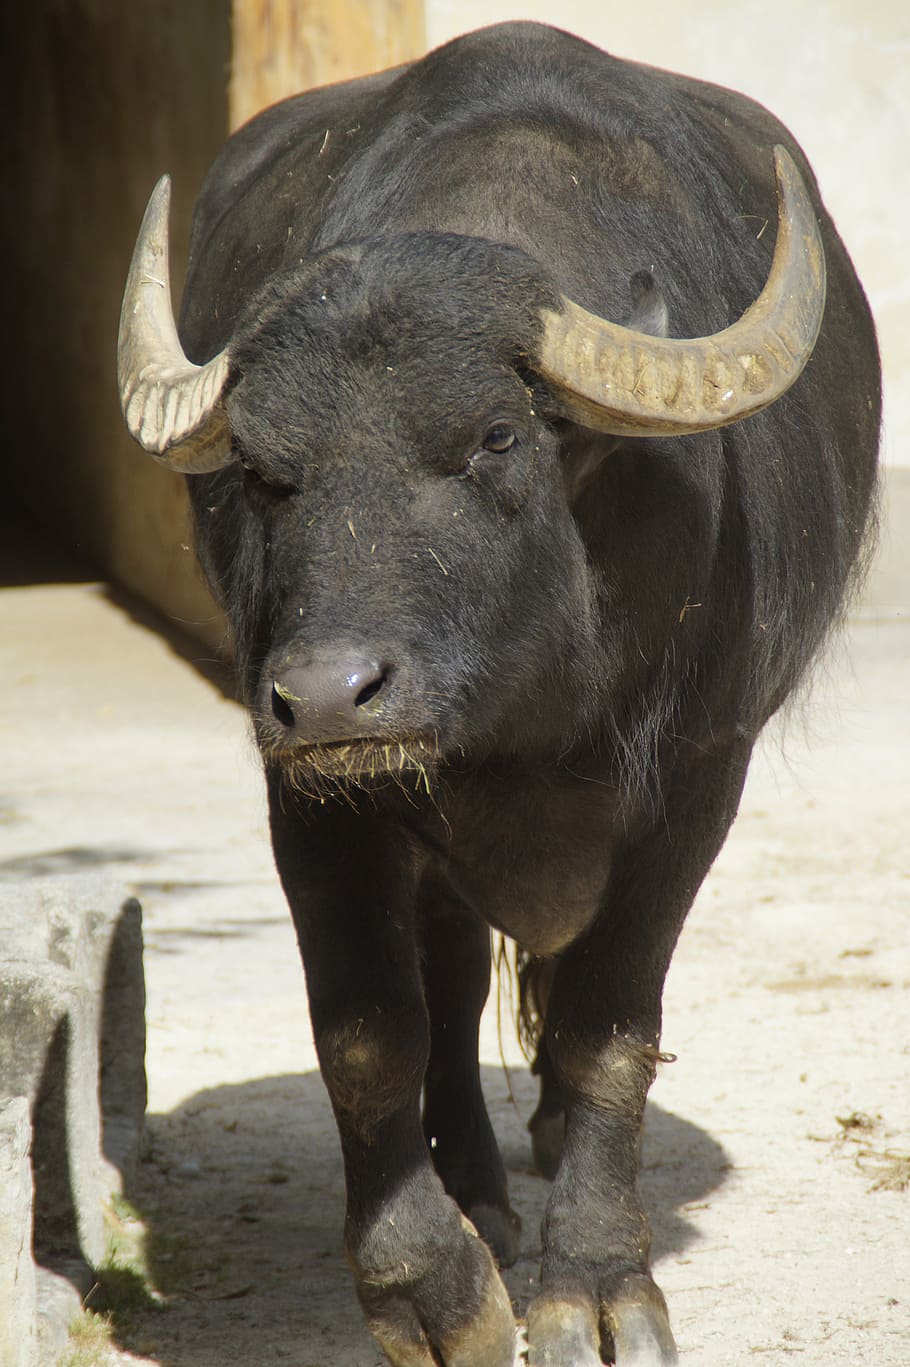 búfalo, búfalo de agua, cuernos, áfrica, zoológico, carne de res, animal, temas de animales, mamífero, vertebrado